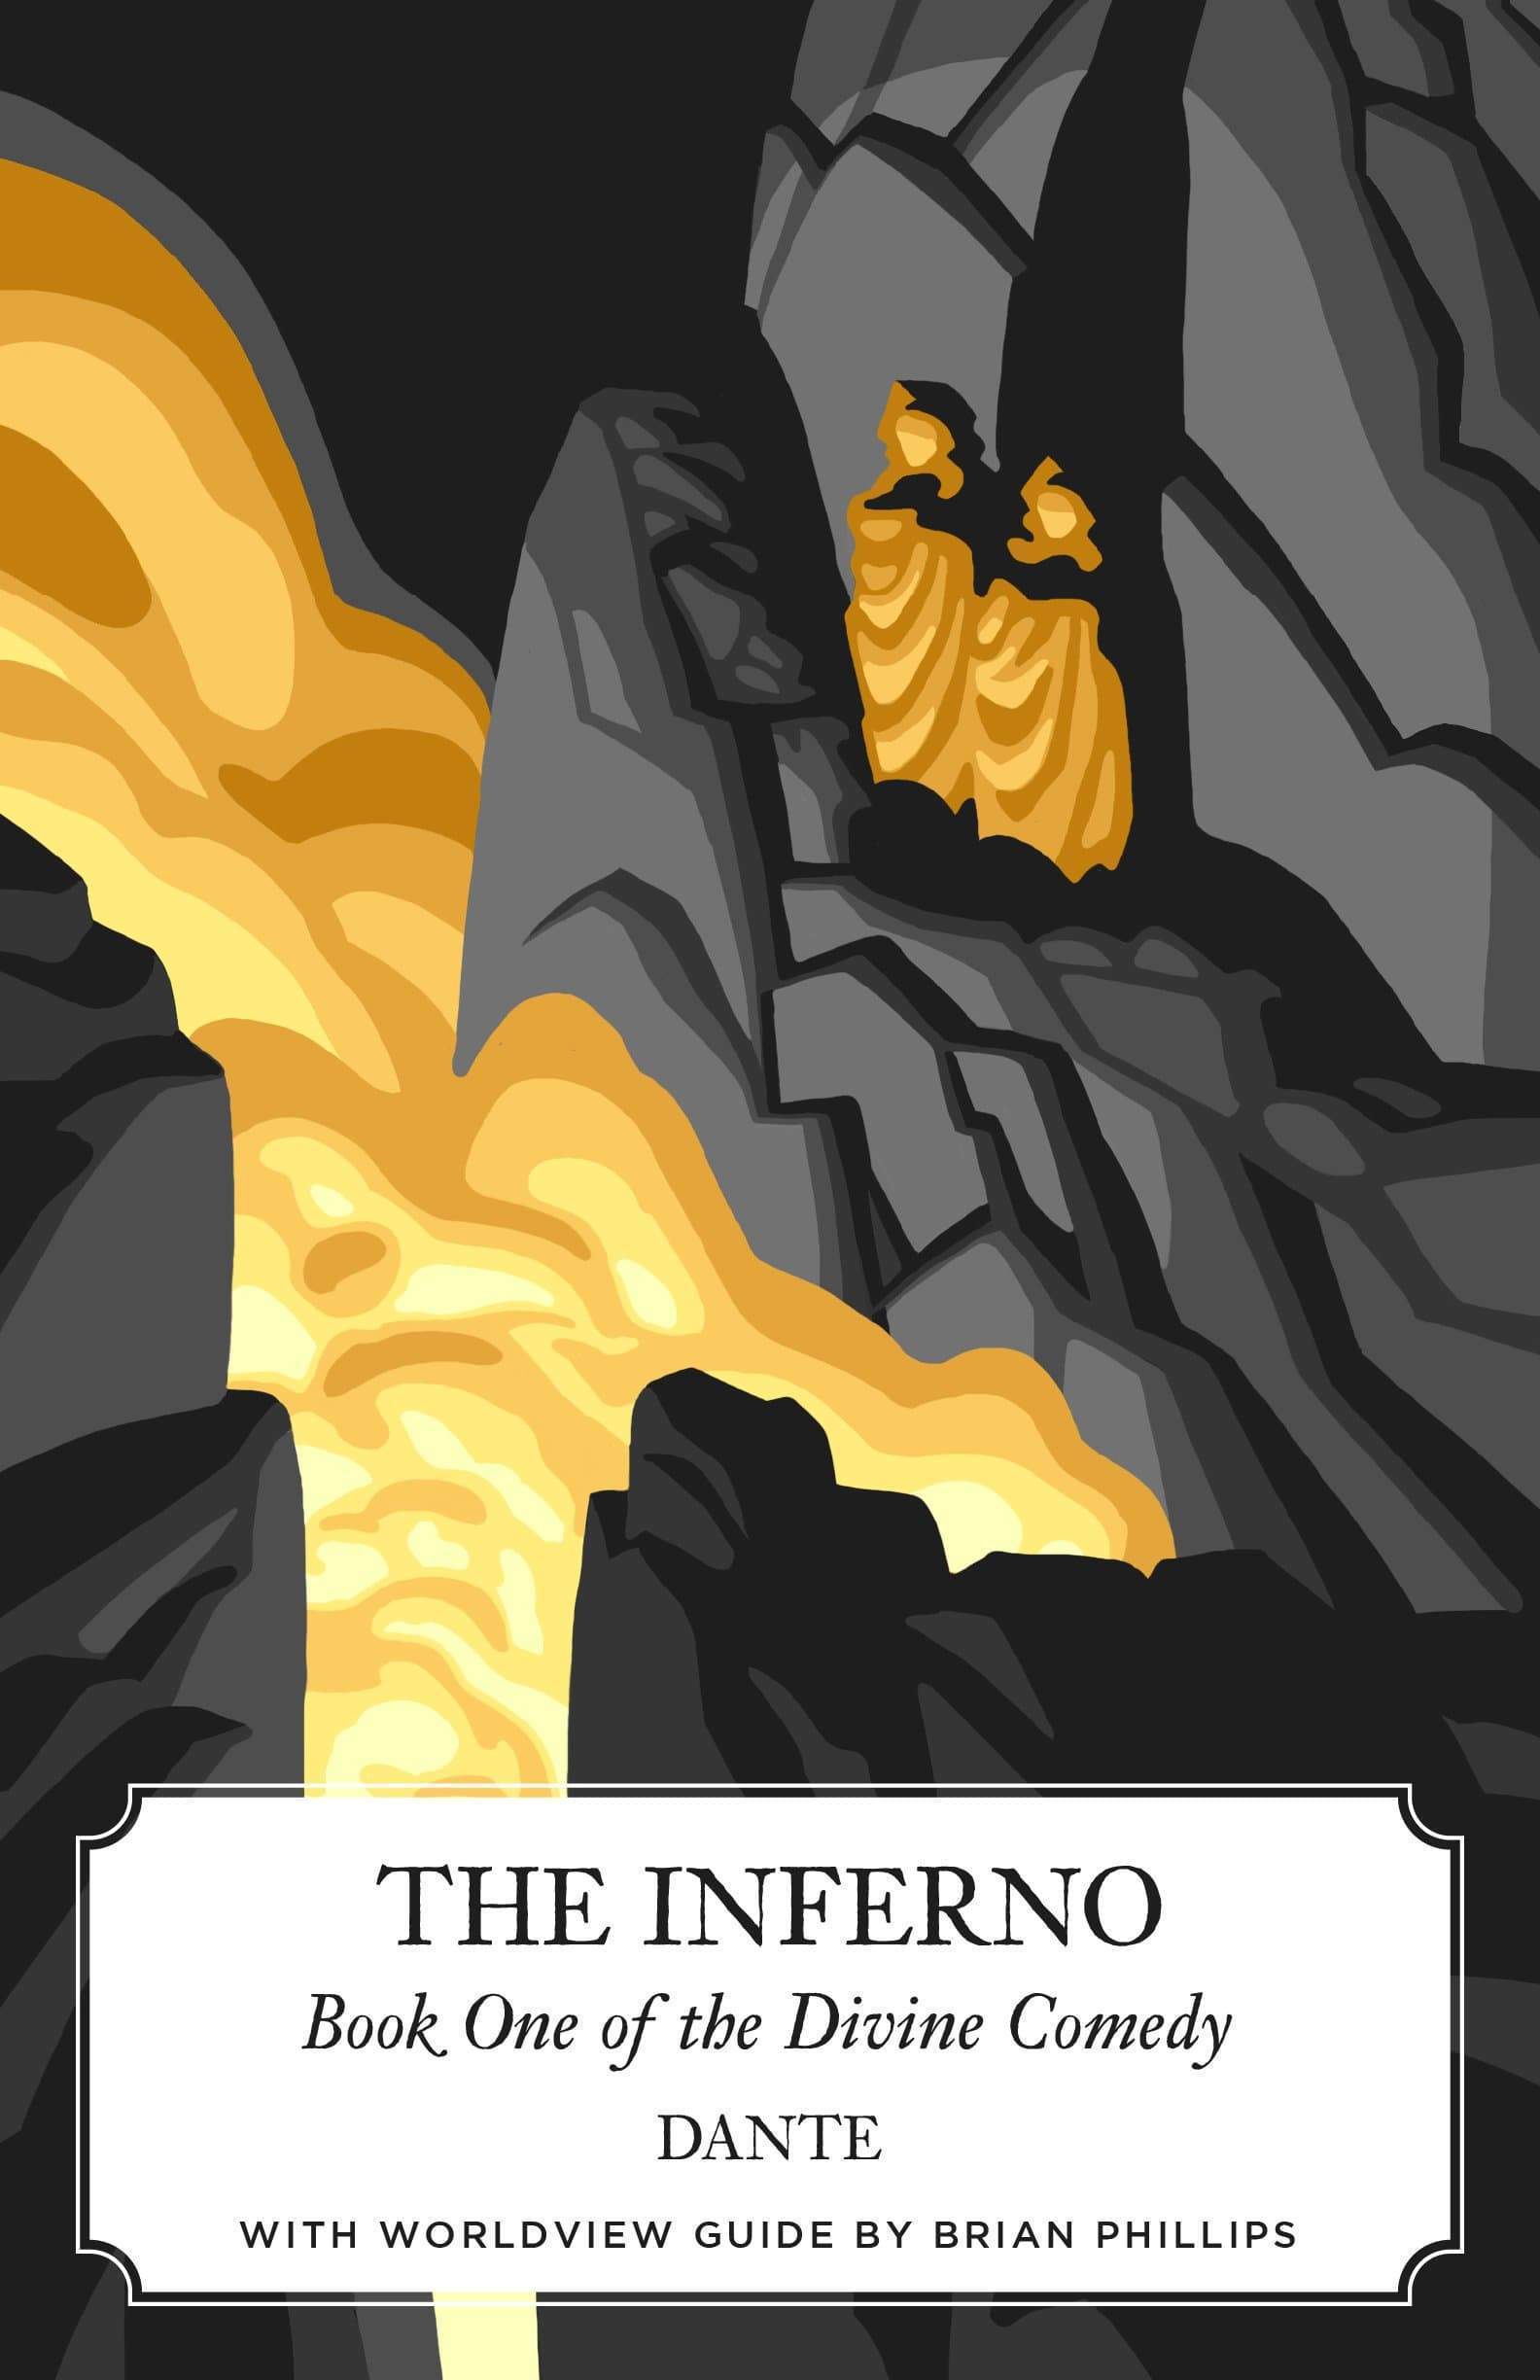 The Divine Comedy: Inferno Character Analysis Activity - Dante Alighieri